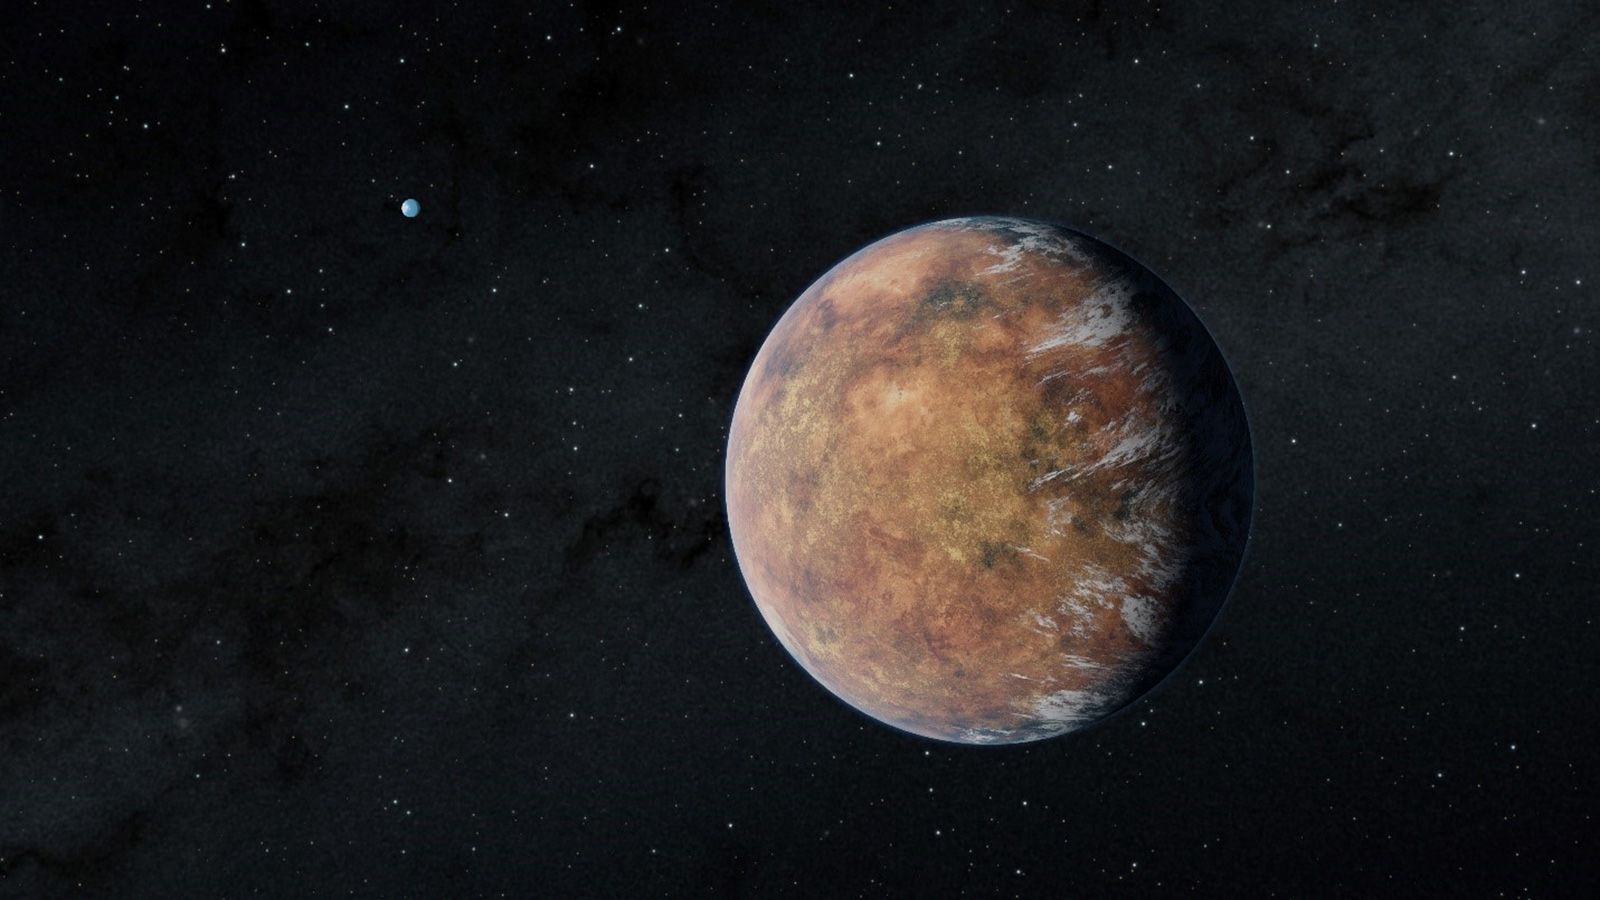 the latest exoplanets habitable